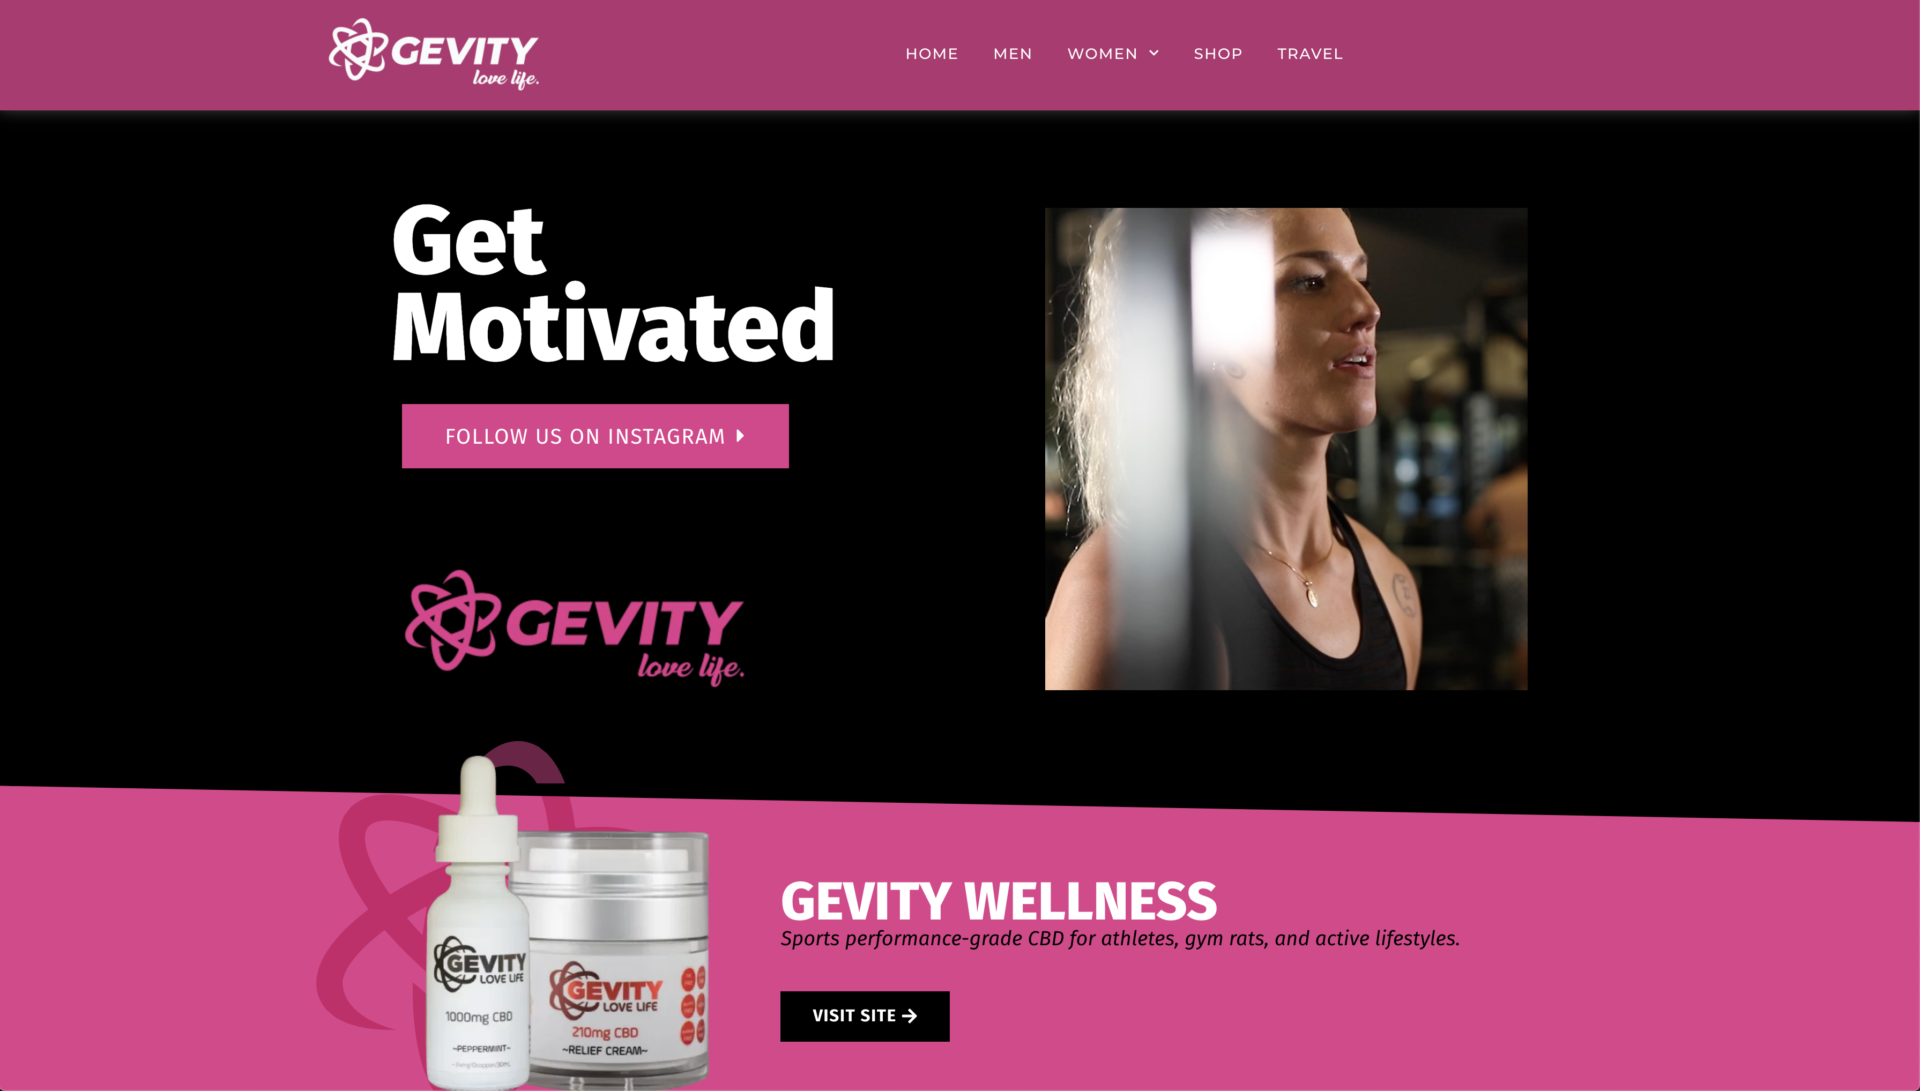 Gevity Apparel website